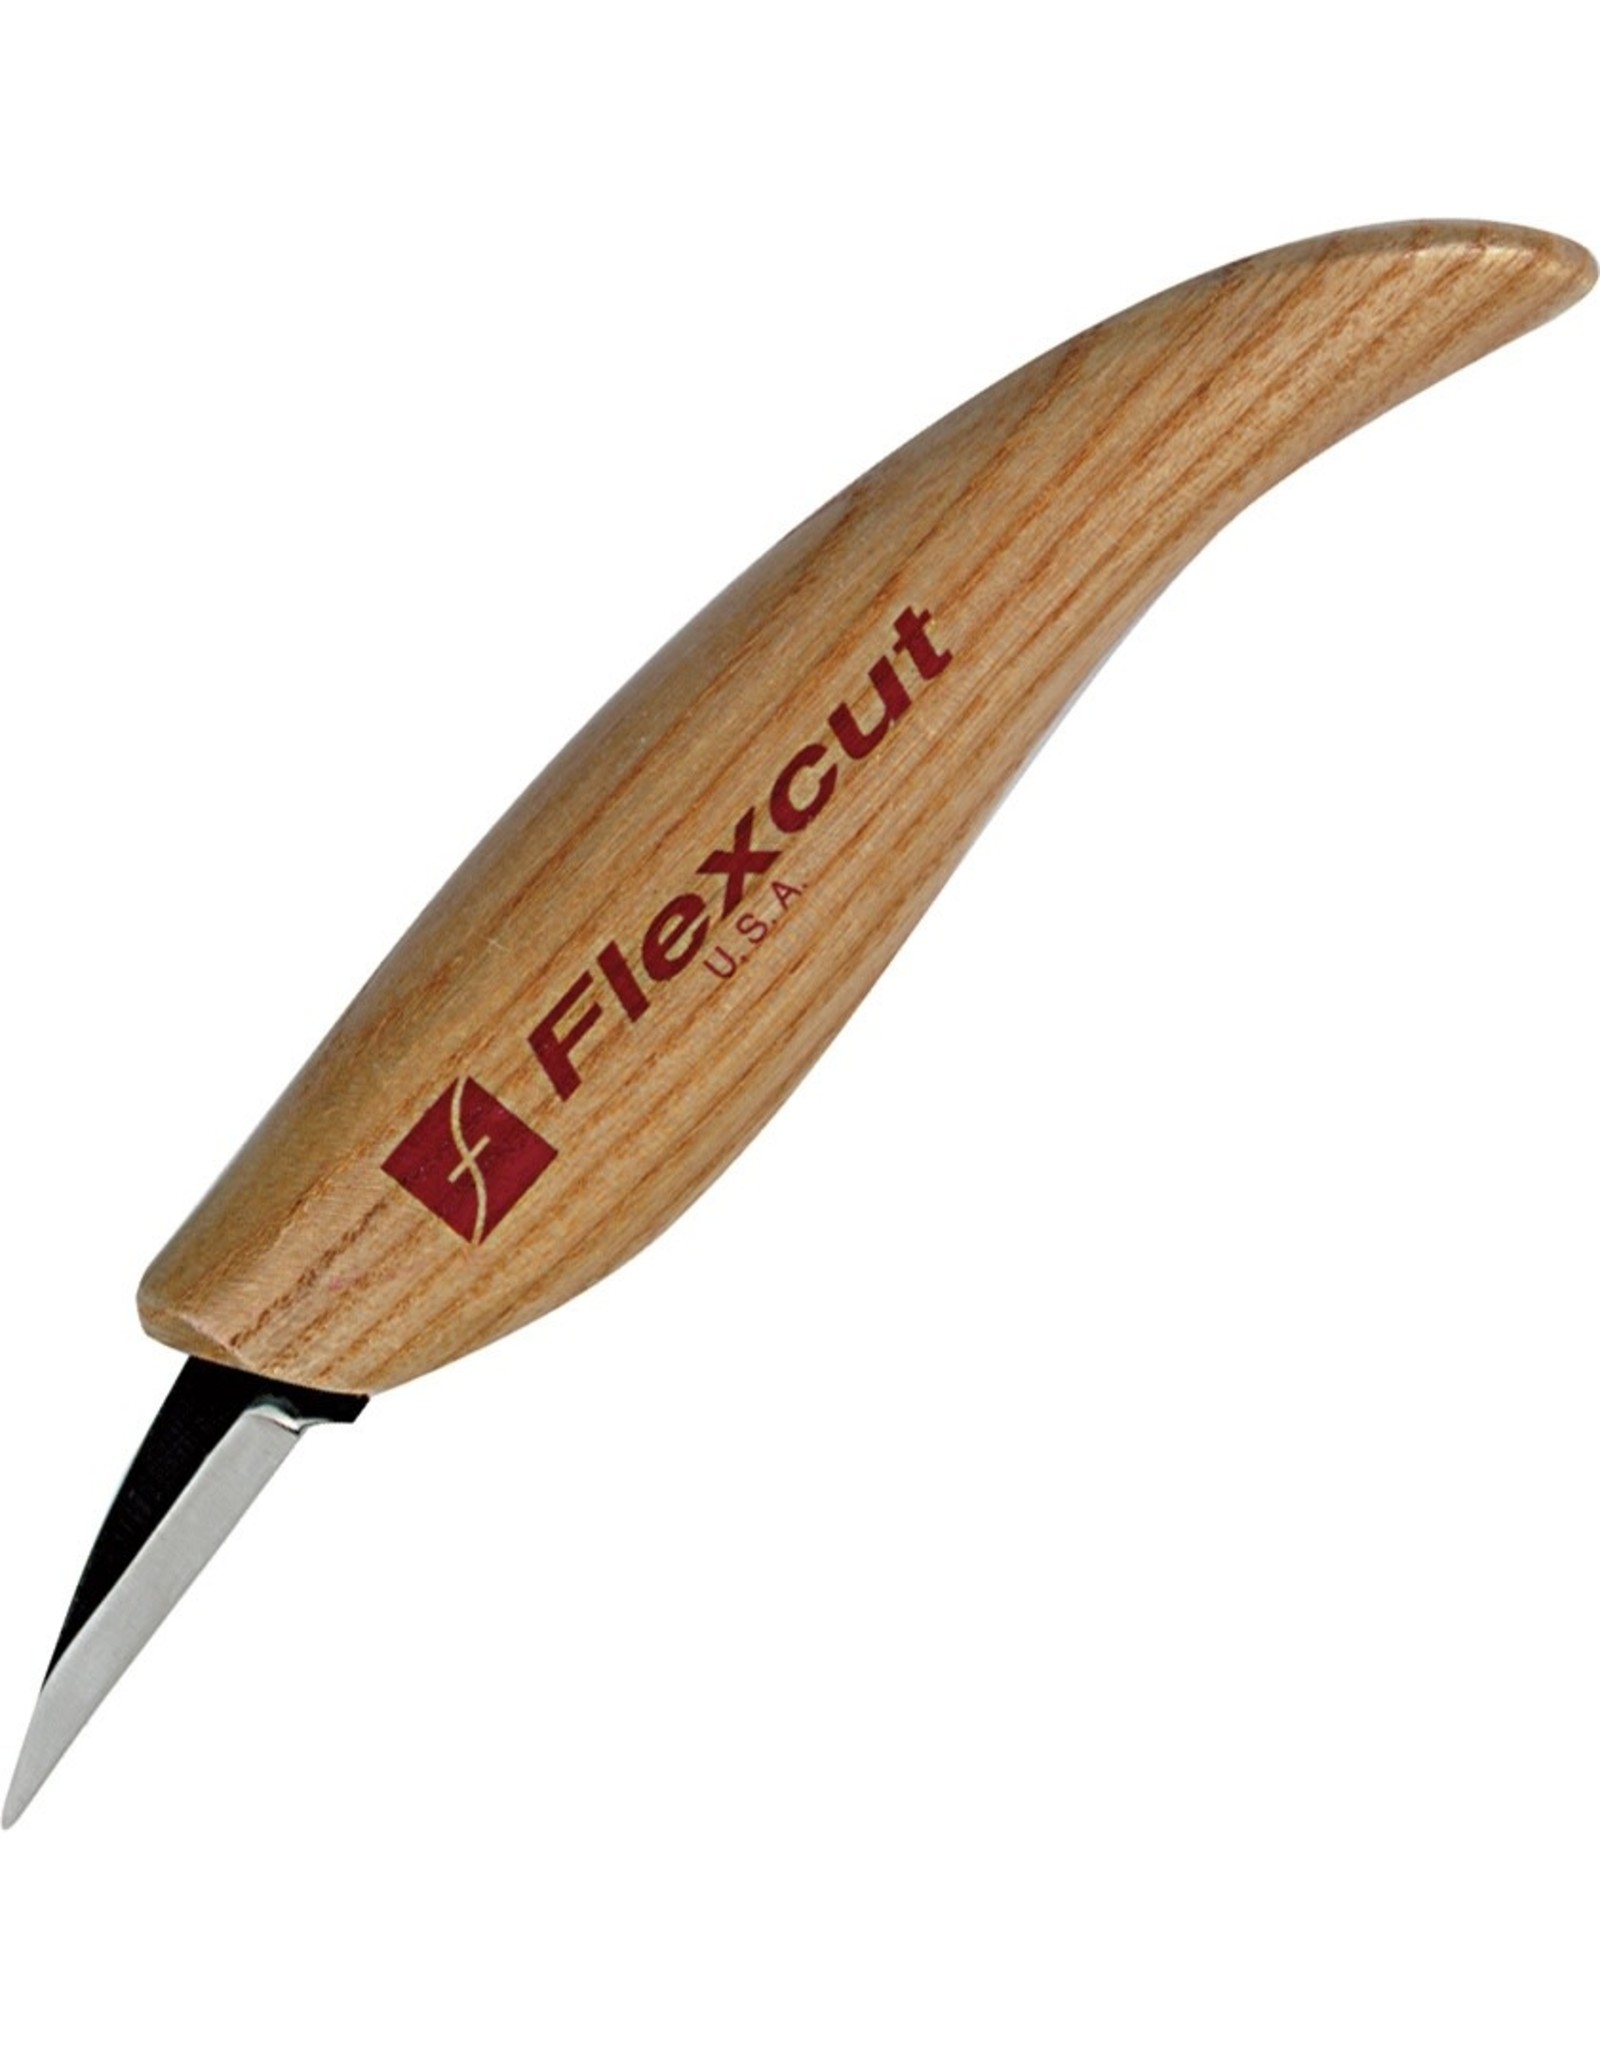 Flexcut Tool Company Inc. FLEXCUT DETAIL KNIFE KN13